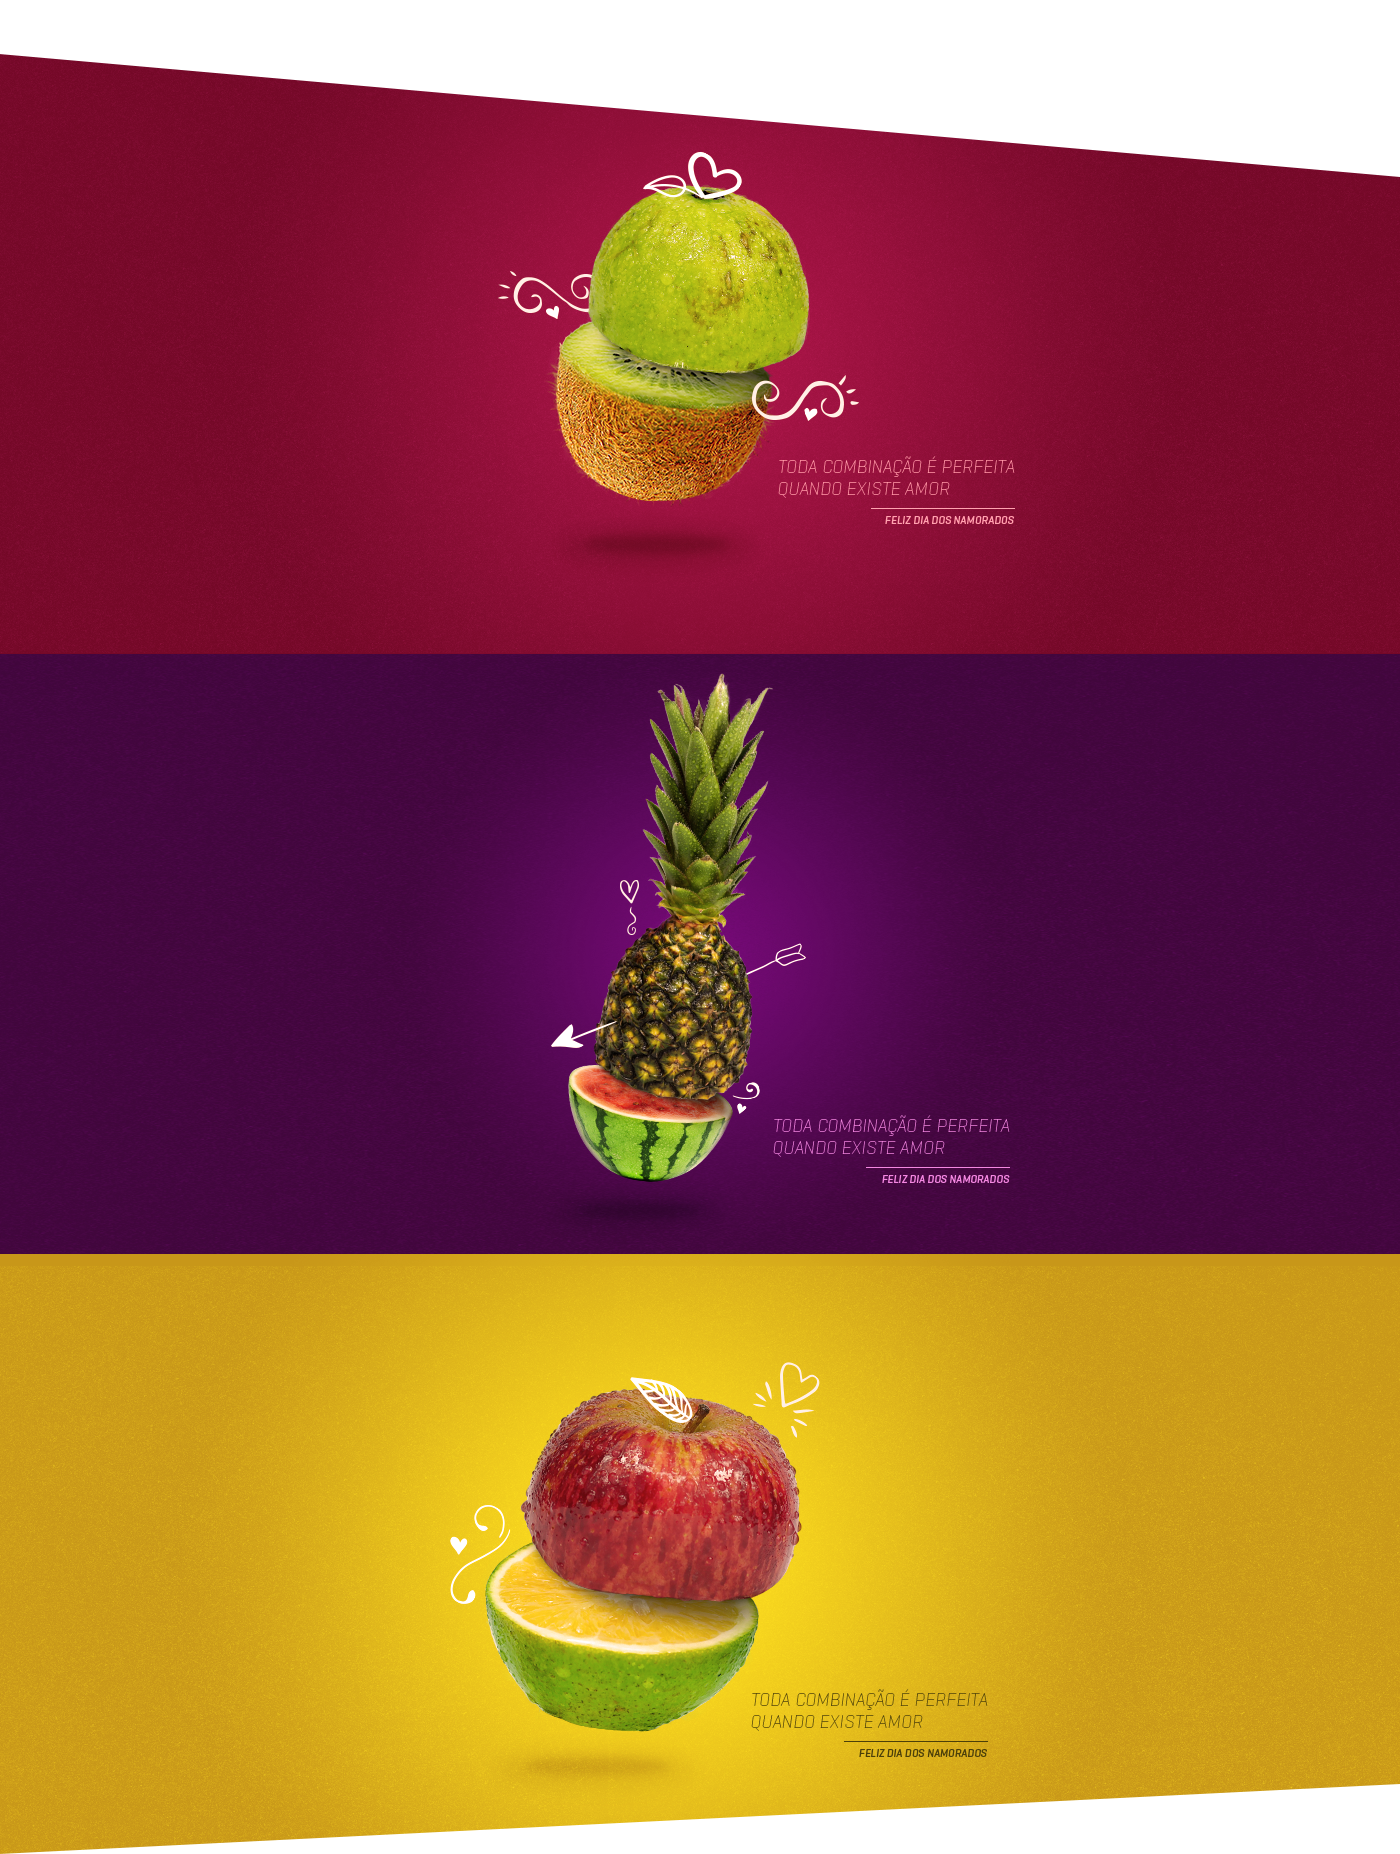 #campanha #diadosnamorados #Advertising #fruit  #love